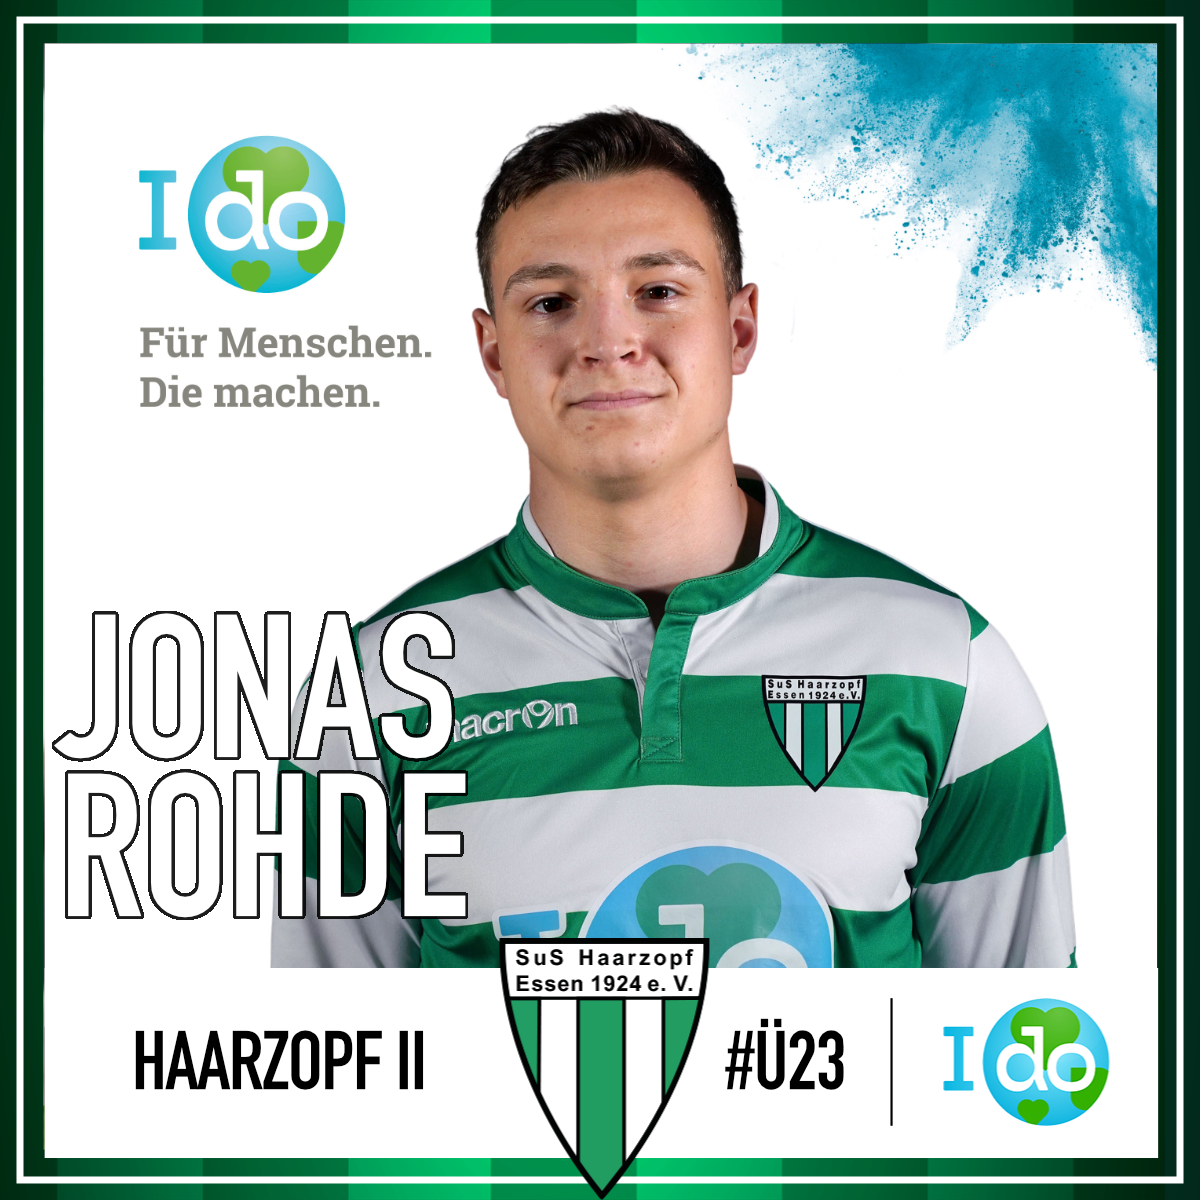 Jonas Rohde